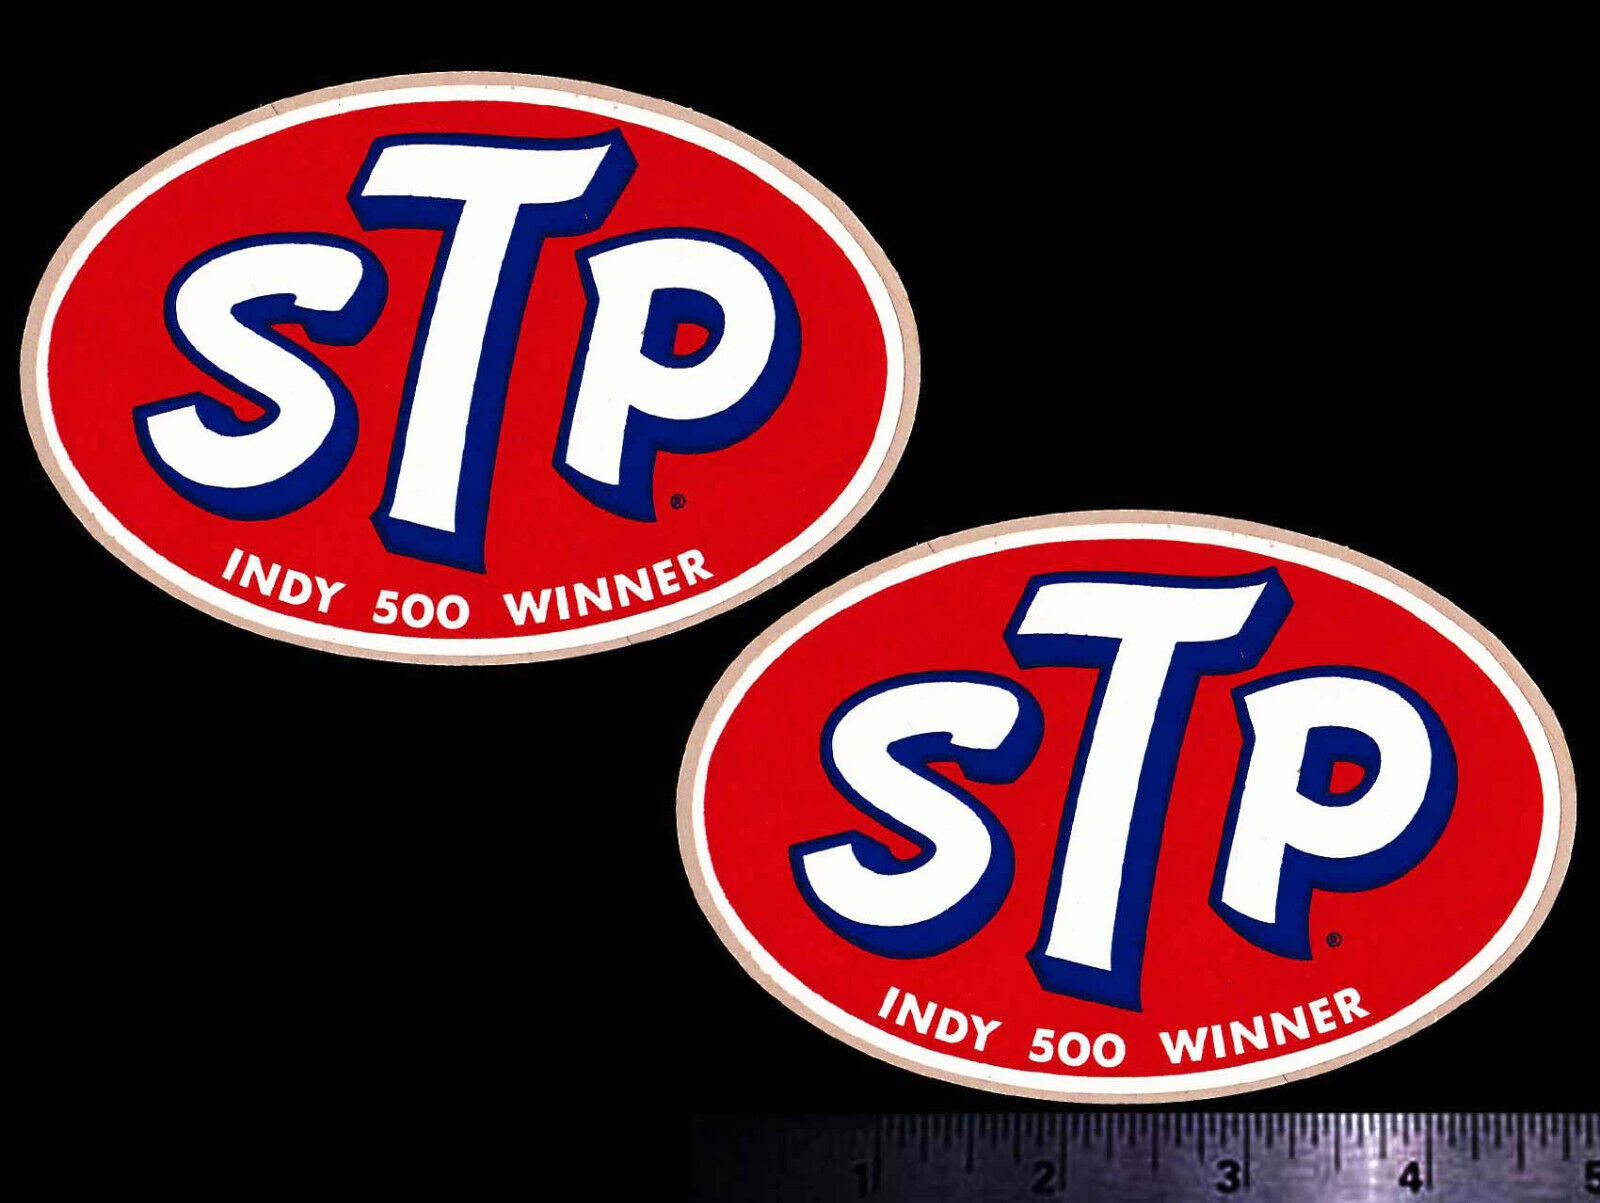 STP Indy 500 Winner - Set of 2 Original Vintage Racing Decals/Stickers Petty